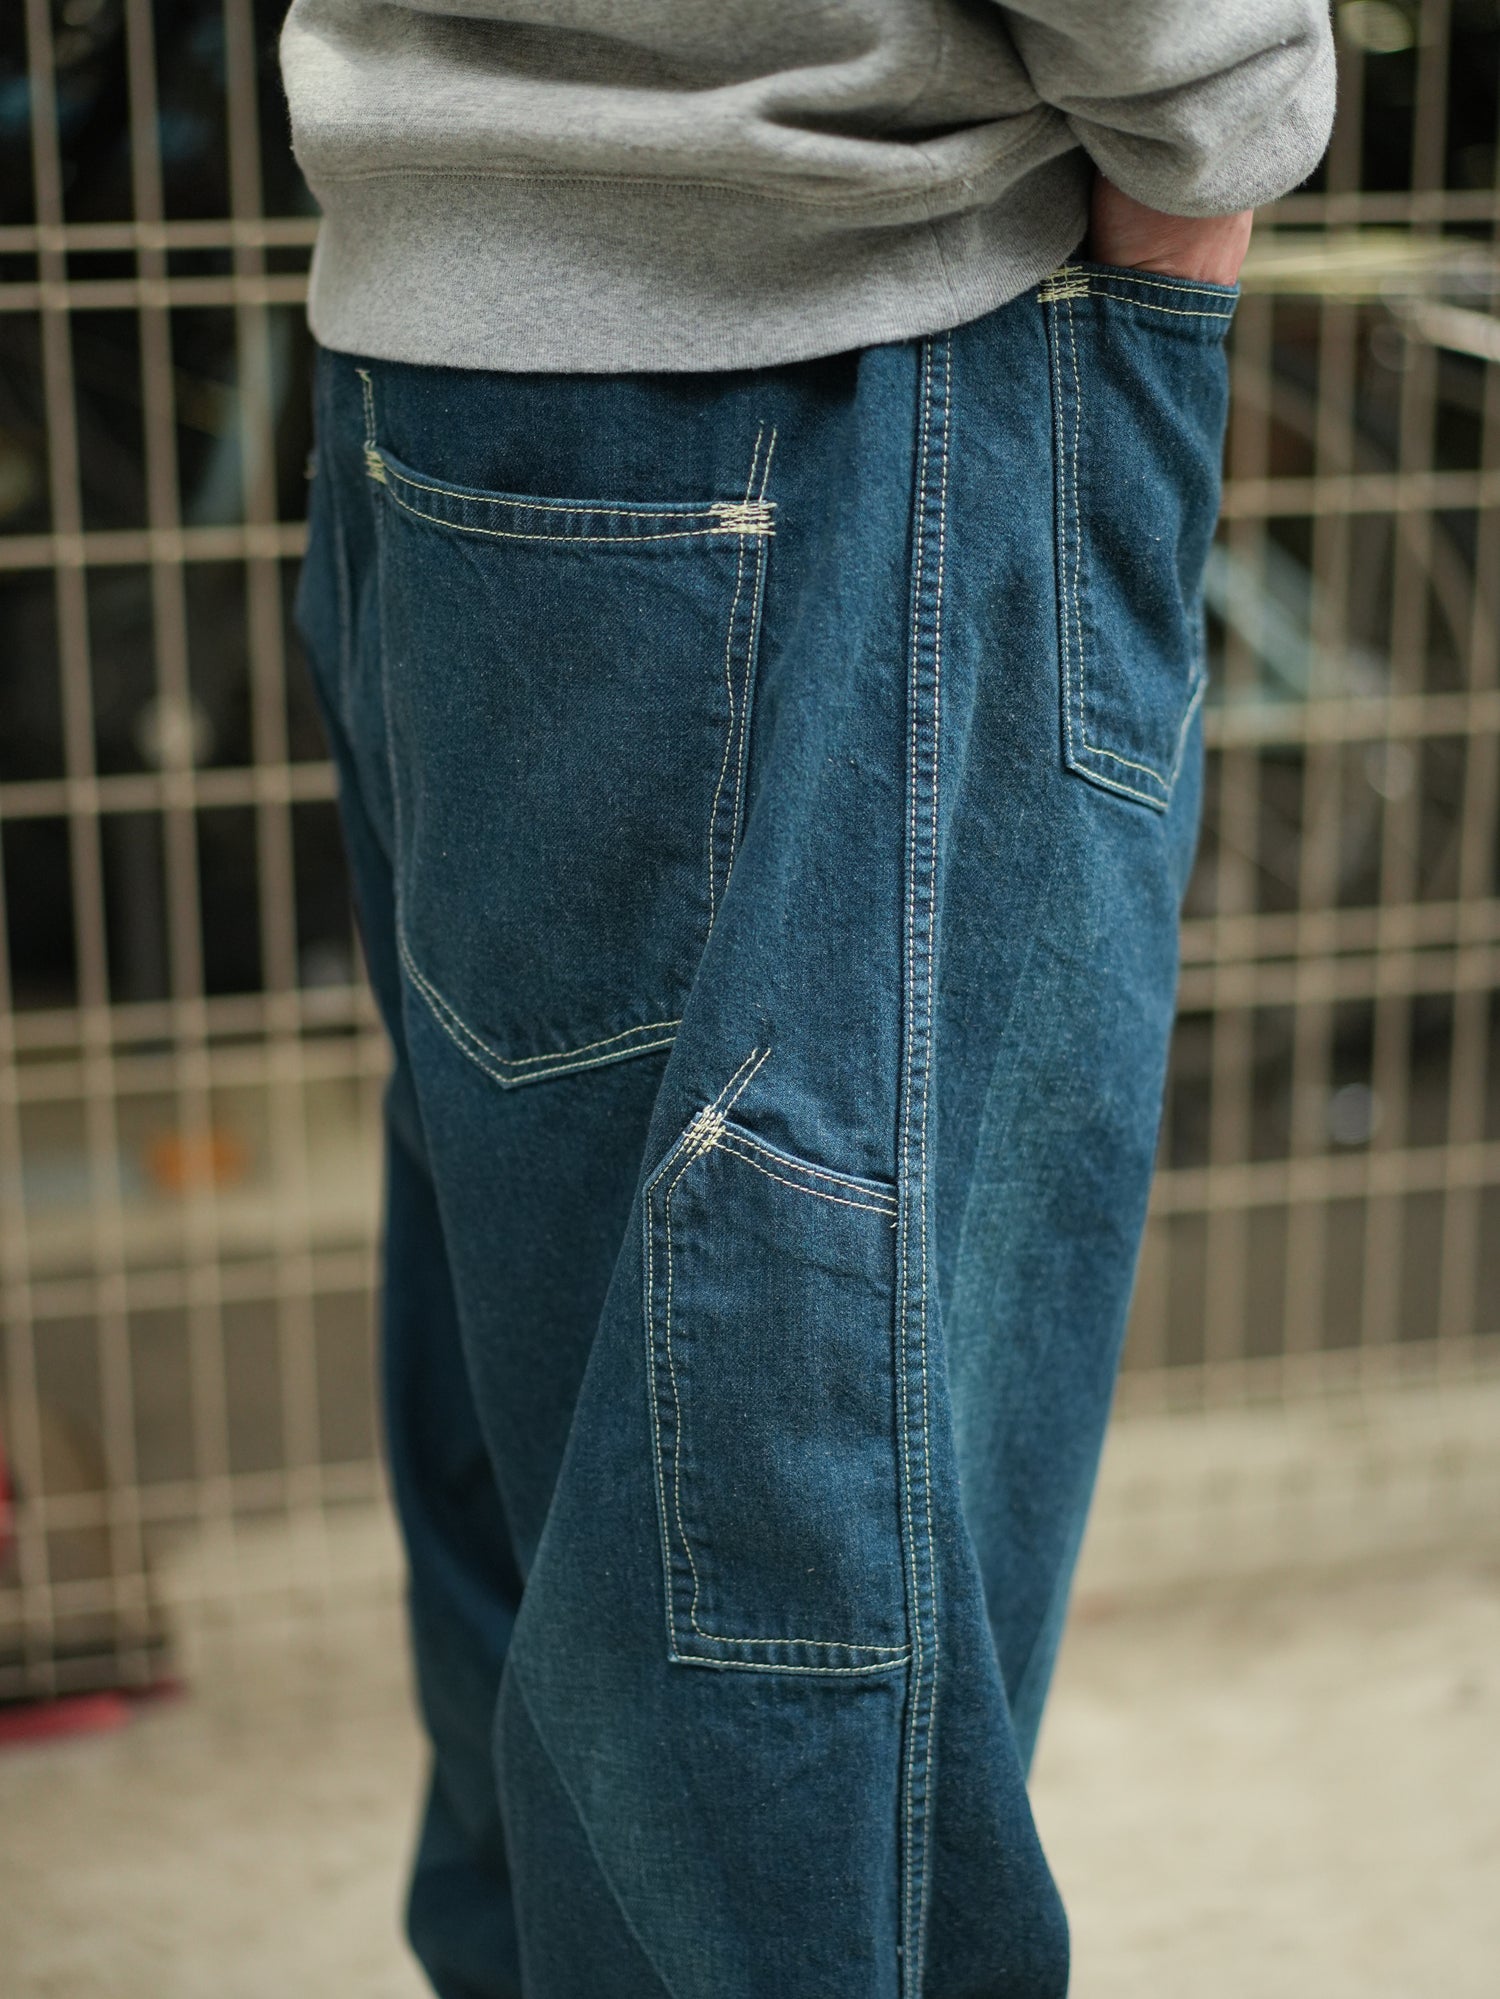 171cm59kg【DAN】Replica Jeans - Strapped